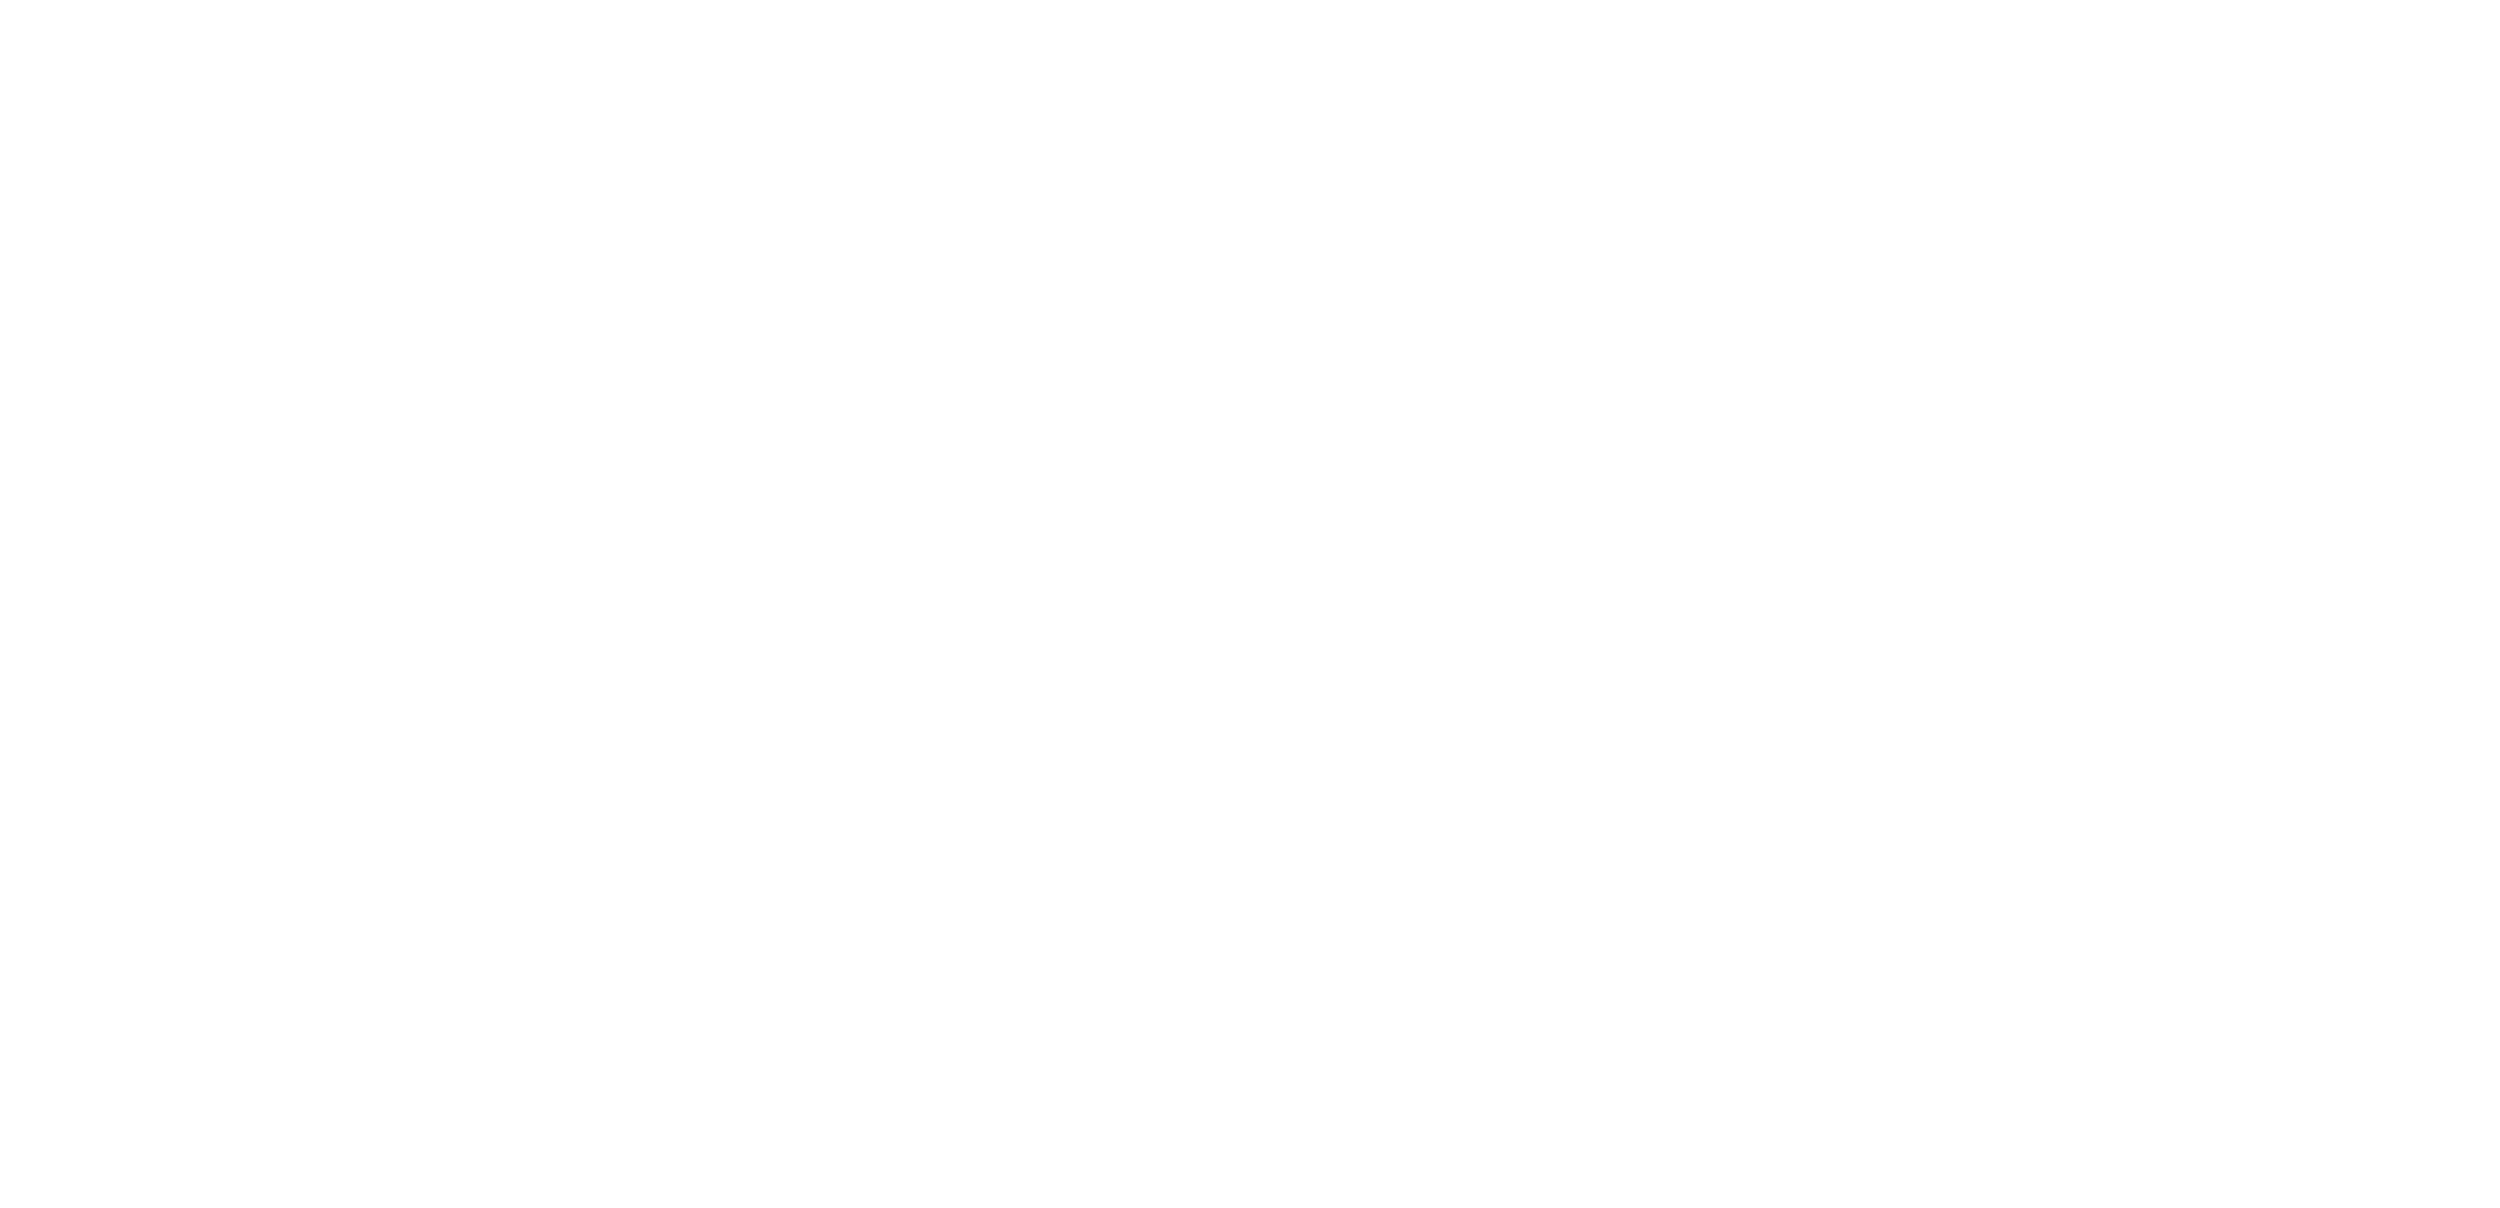 Swing México Logo Blanco